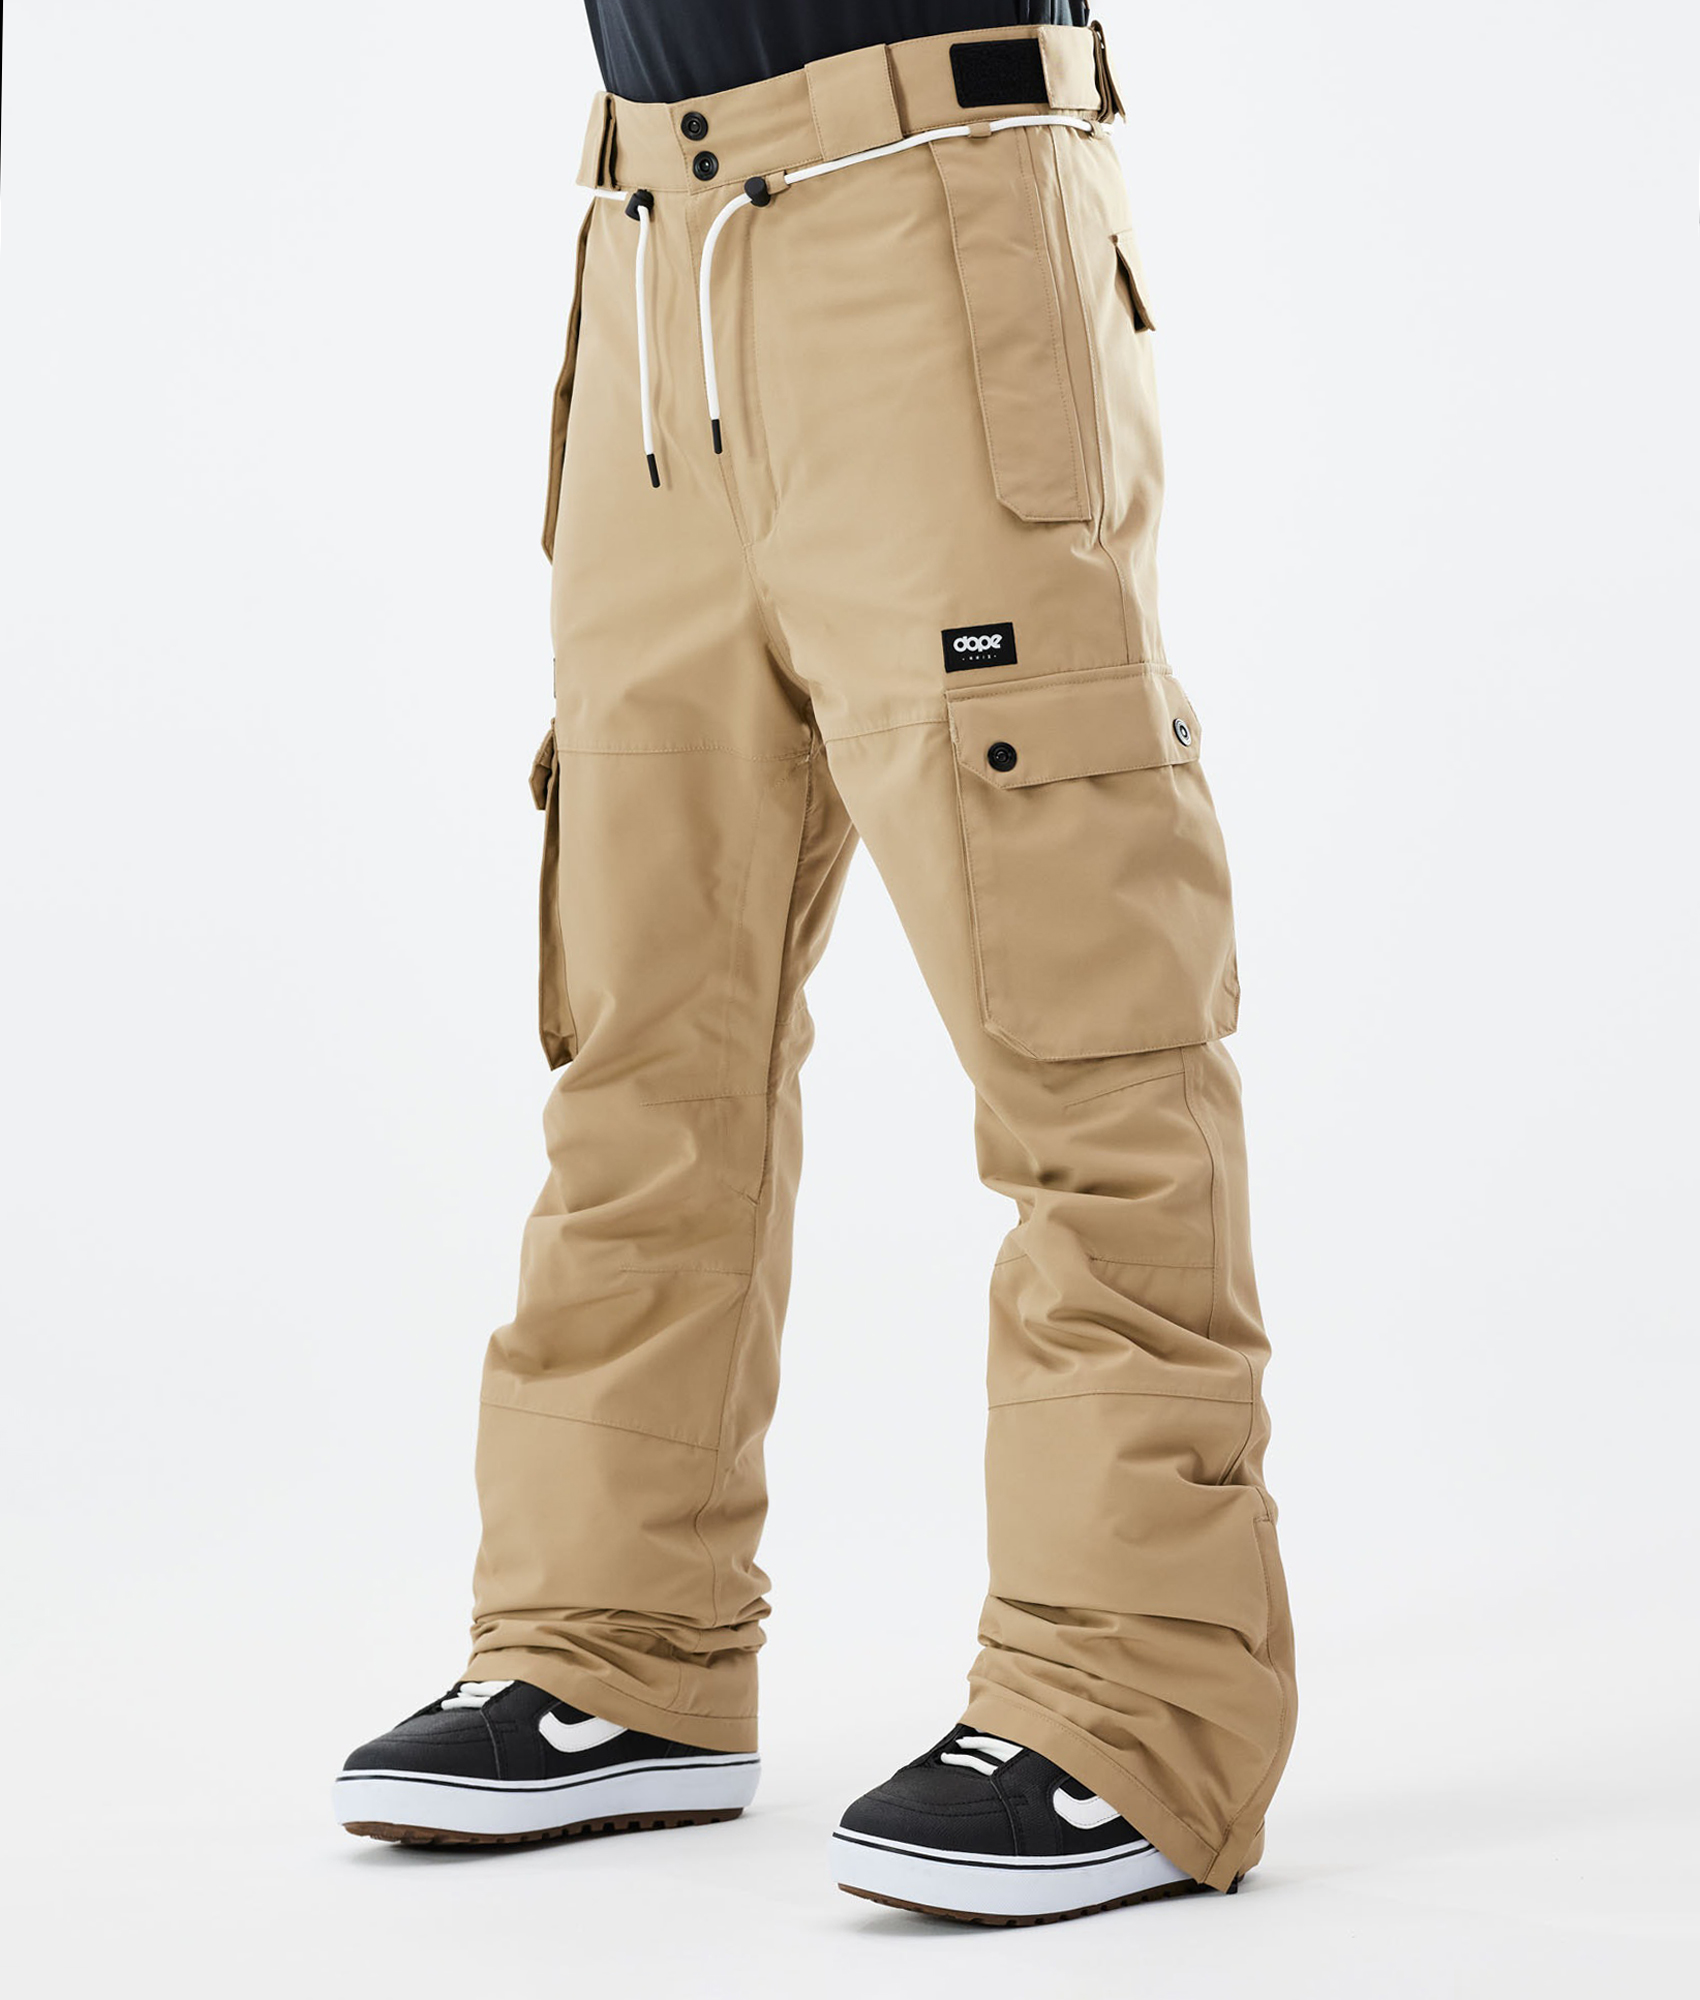 Dope Iconic 2021 Mens Snowboard Pants Orange 55 OFF